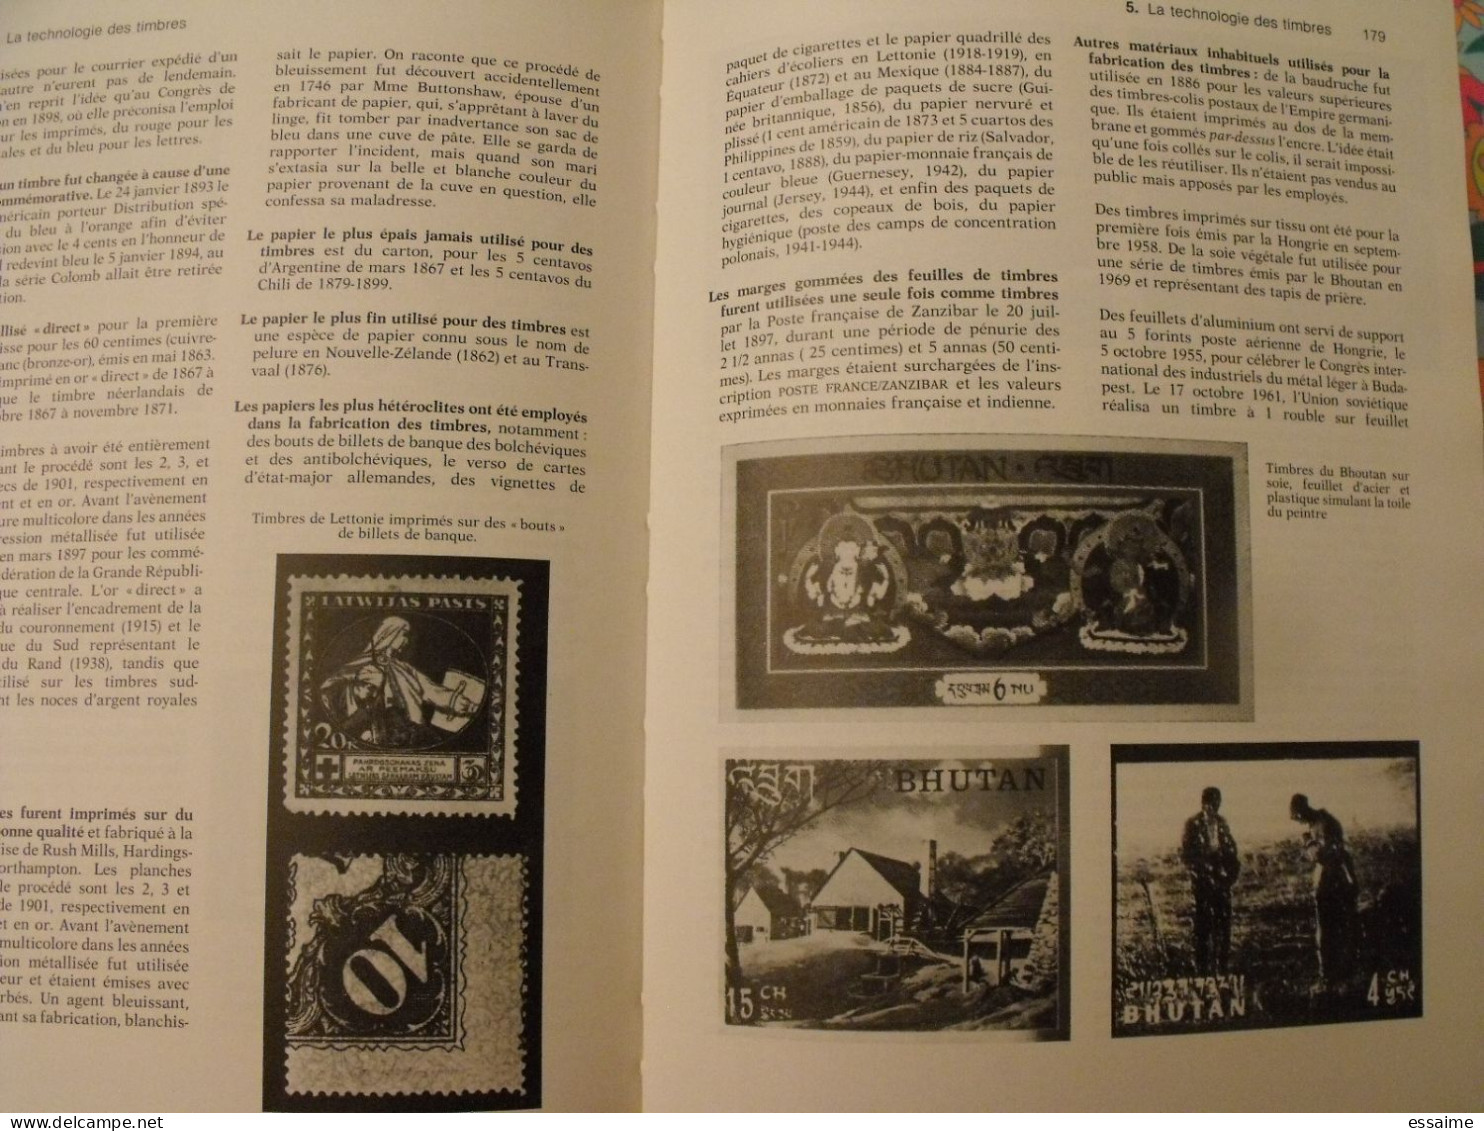 Le Livre Guinness Des Timbres; édition N° 1. Marcel Hunzinger. 1983. Intéressant, Bien Illustré - Philately And Postal History